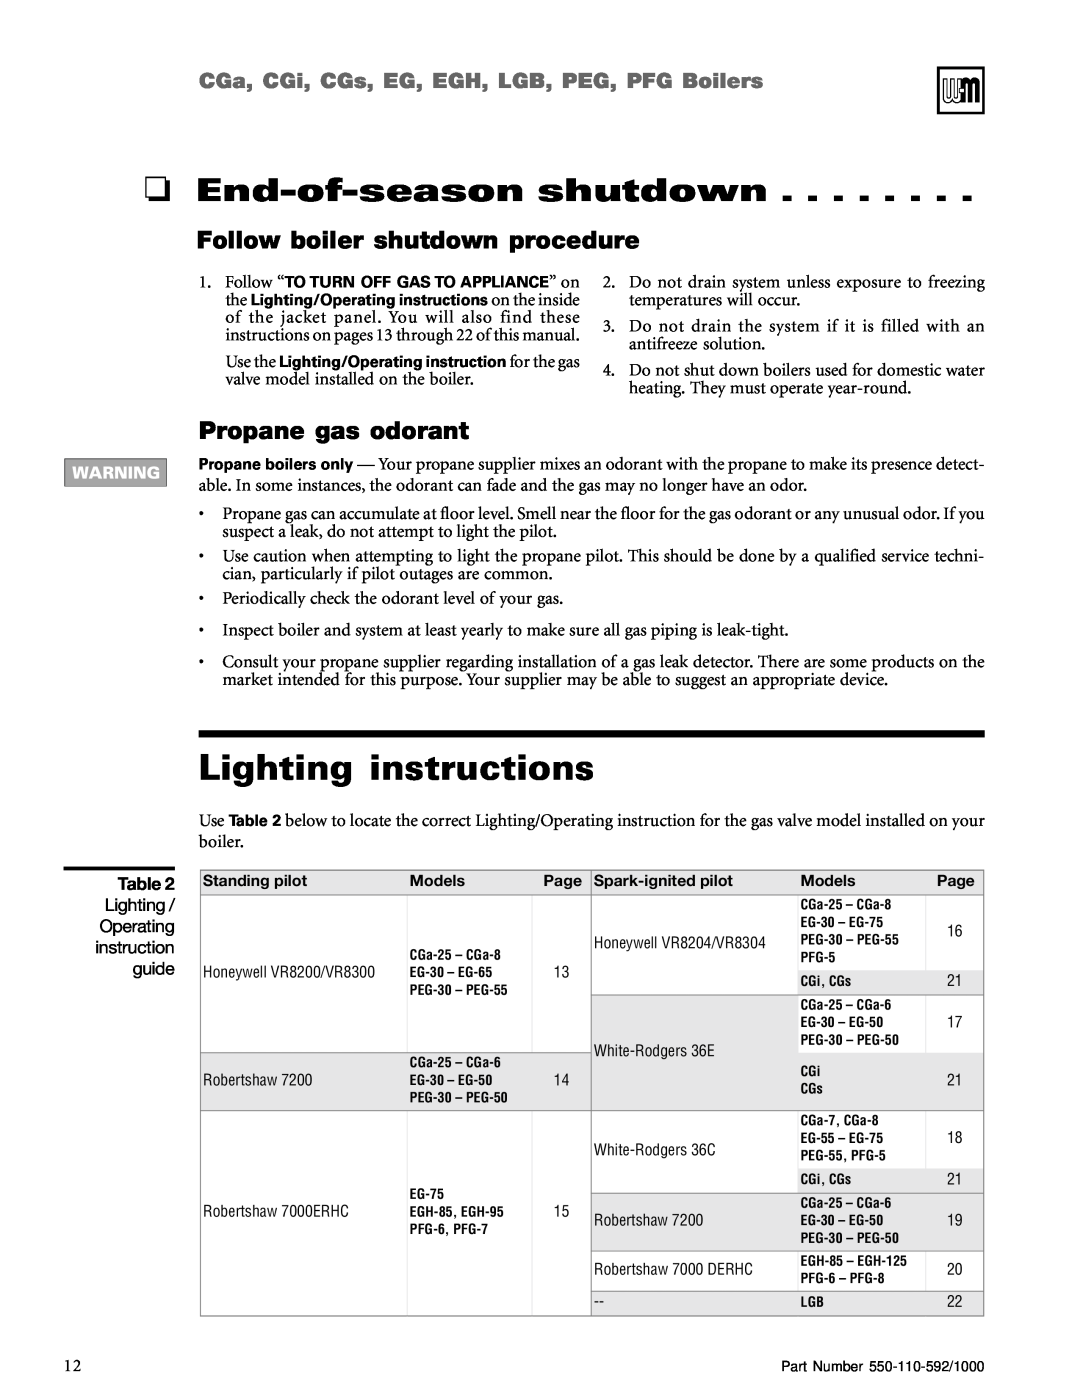 Weil-McLain PFG, PEG Lighting instructions, End-of-seasonshutdown, Follow boiler shutdown procedure, Propane gas odorant 